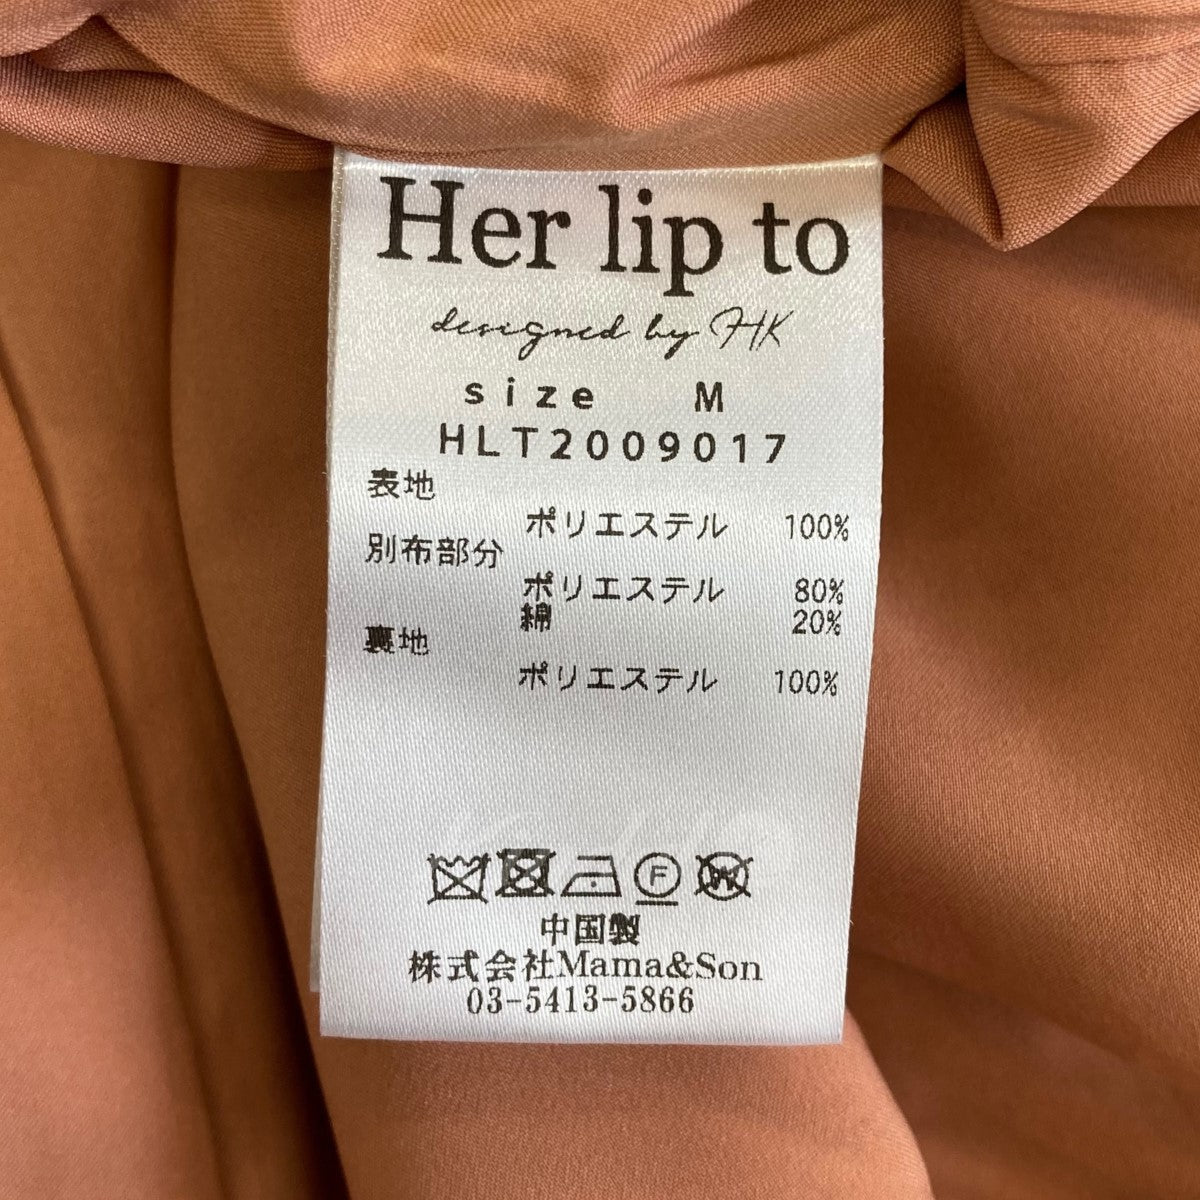 Her lip to(ハーリップトゥ) 「Open Shoulder Back Ribbon Dress」 リボンデザインワンピース  HLT2009017 ピンク サイズ 13｜【公式】カインドオルオンライン ブランド古着・中古通販【kindal】